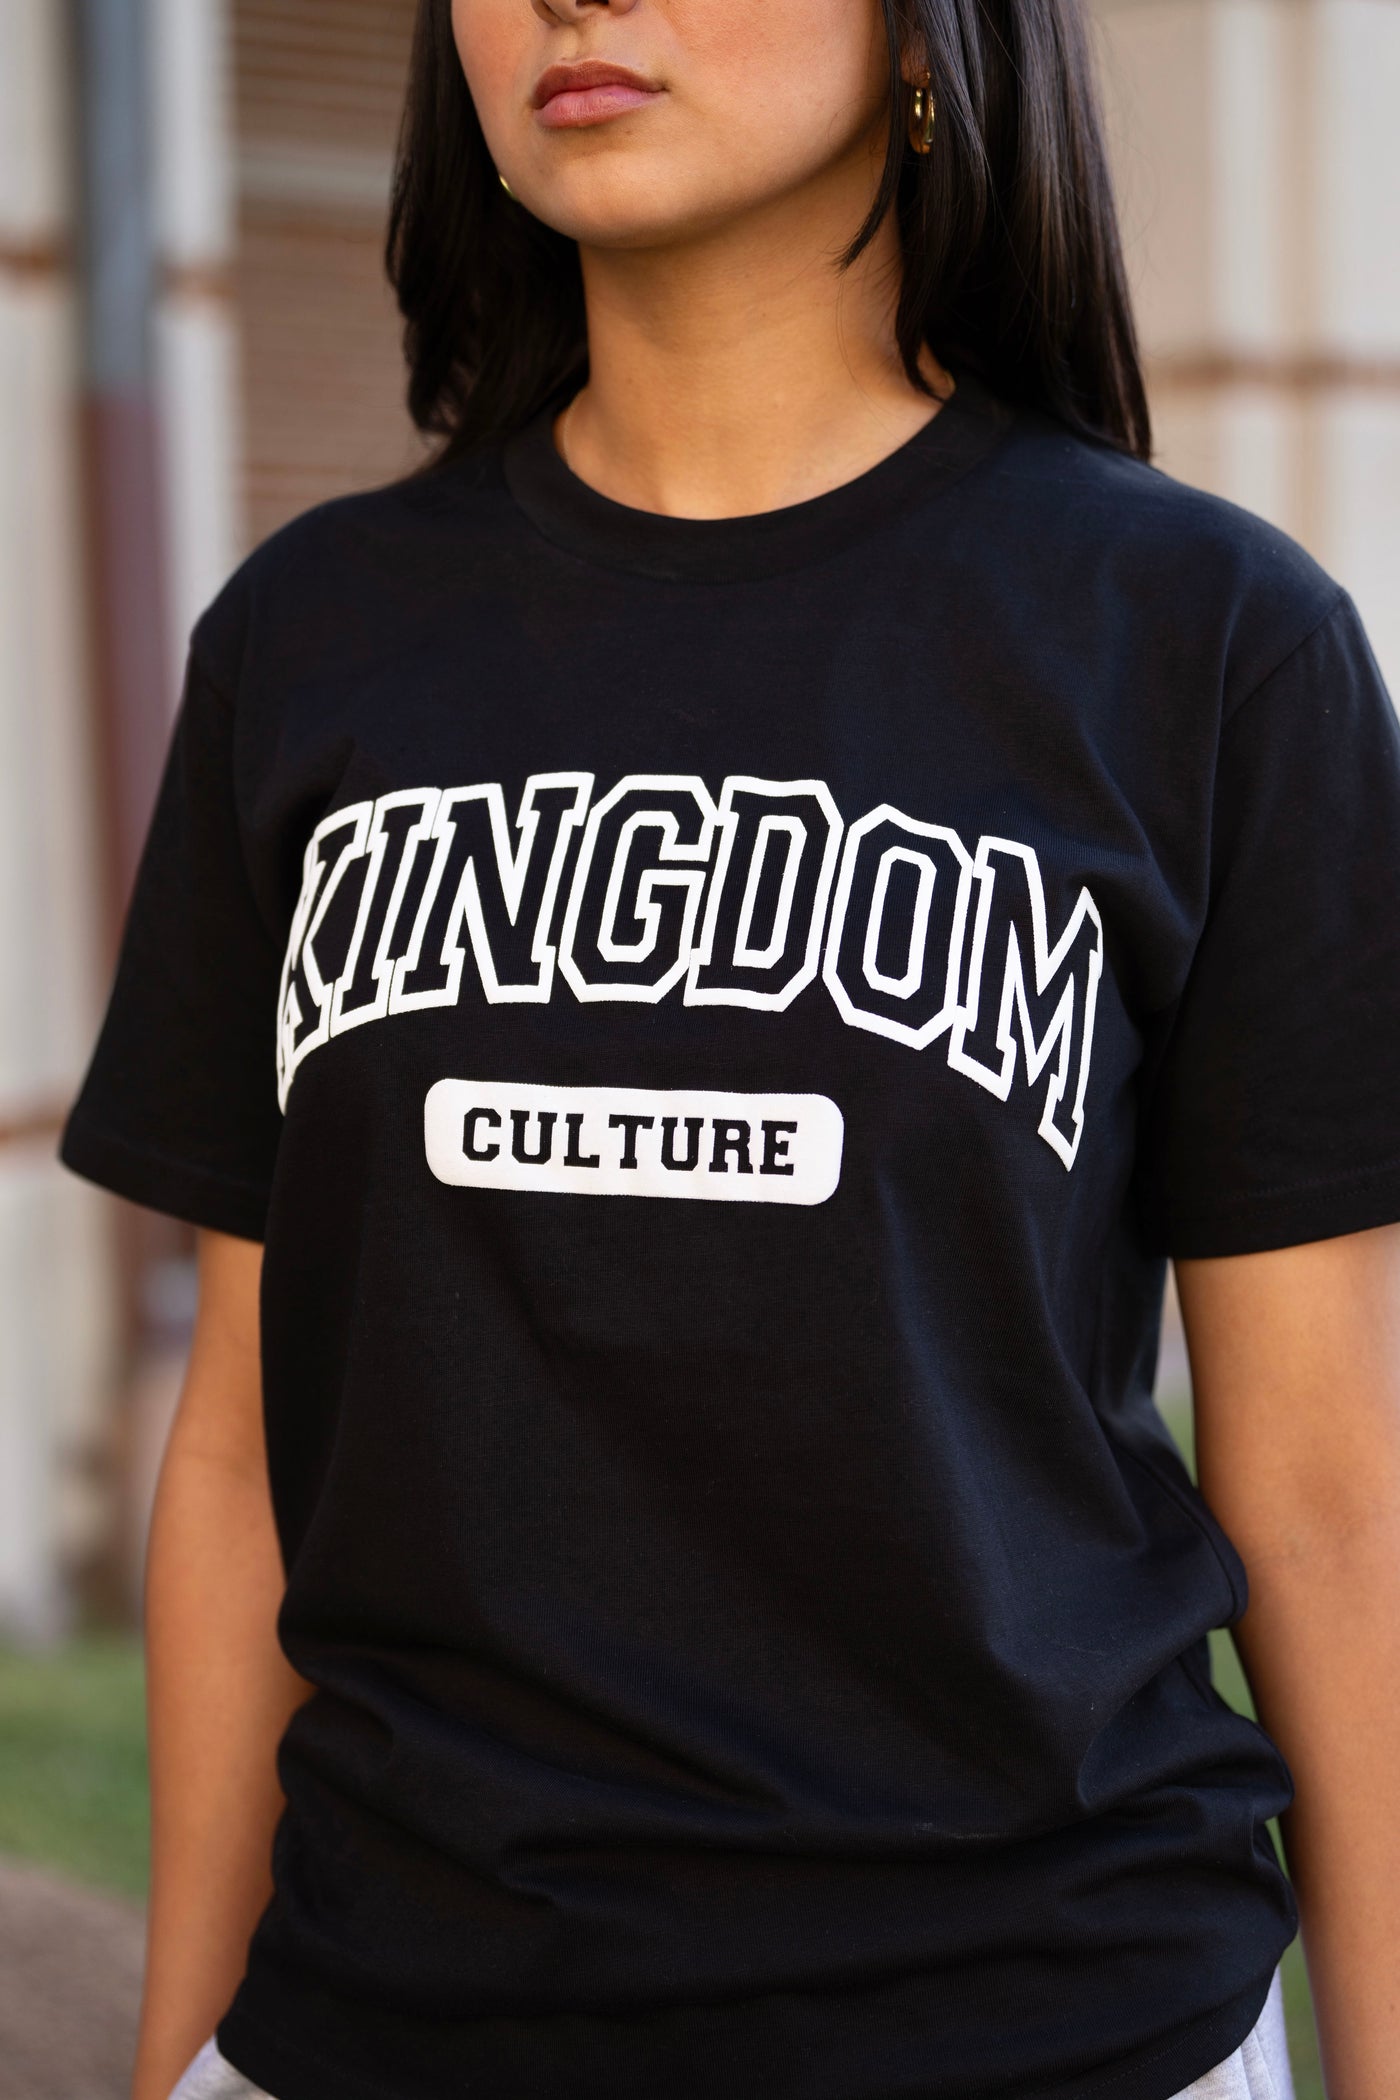 Kingdom Culture Collegiate Tee - Black